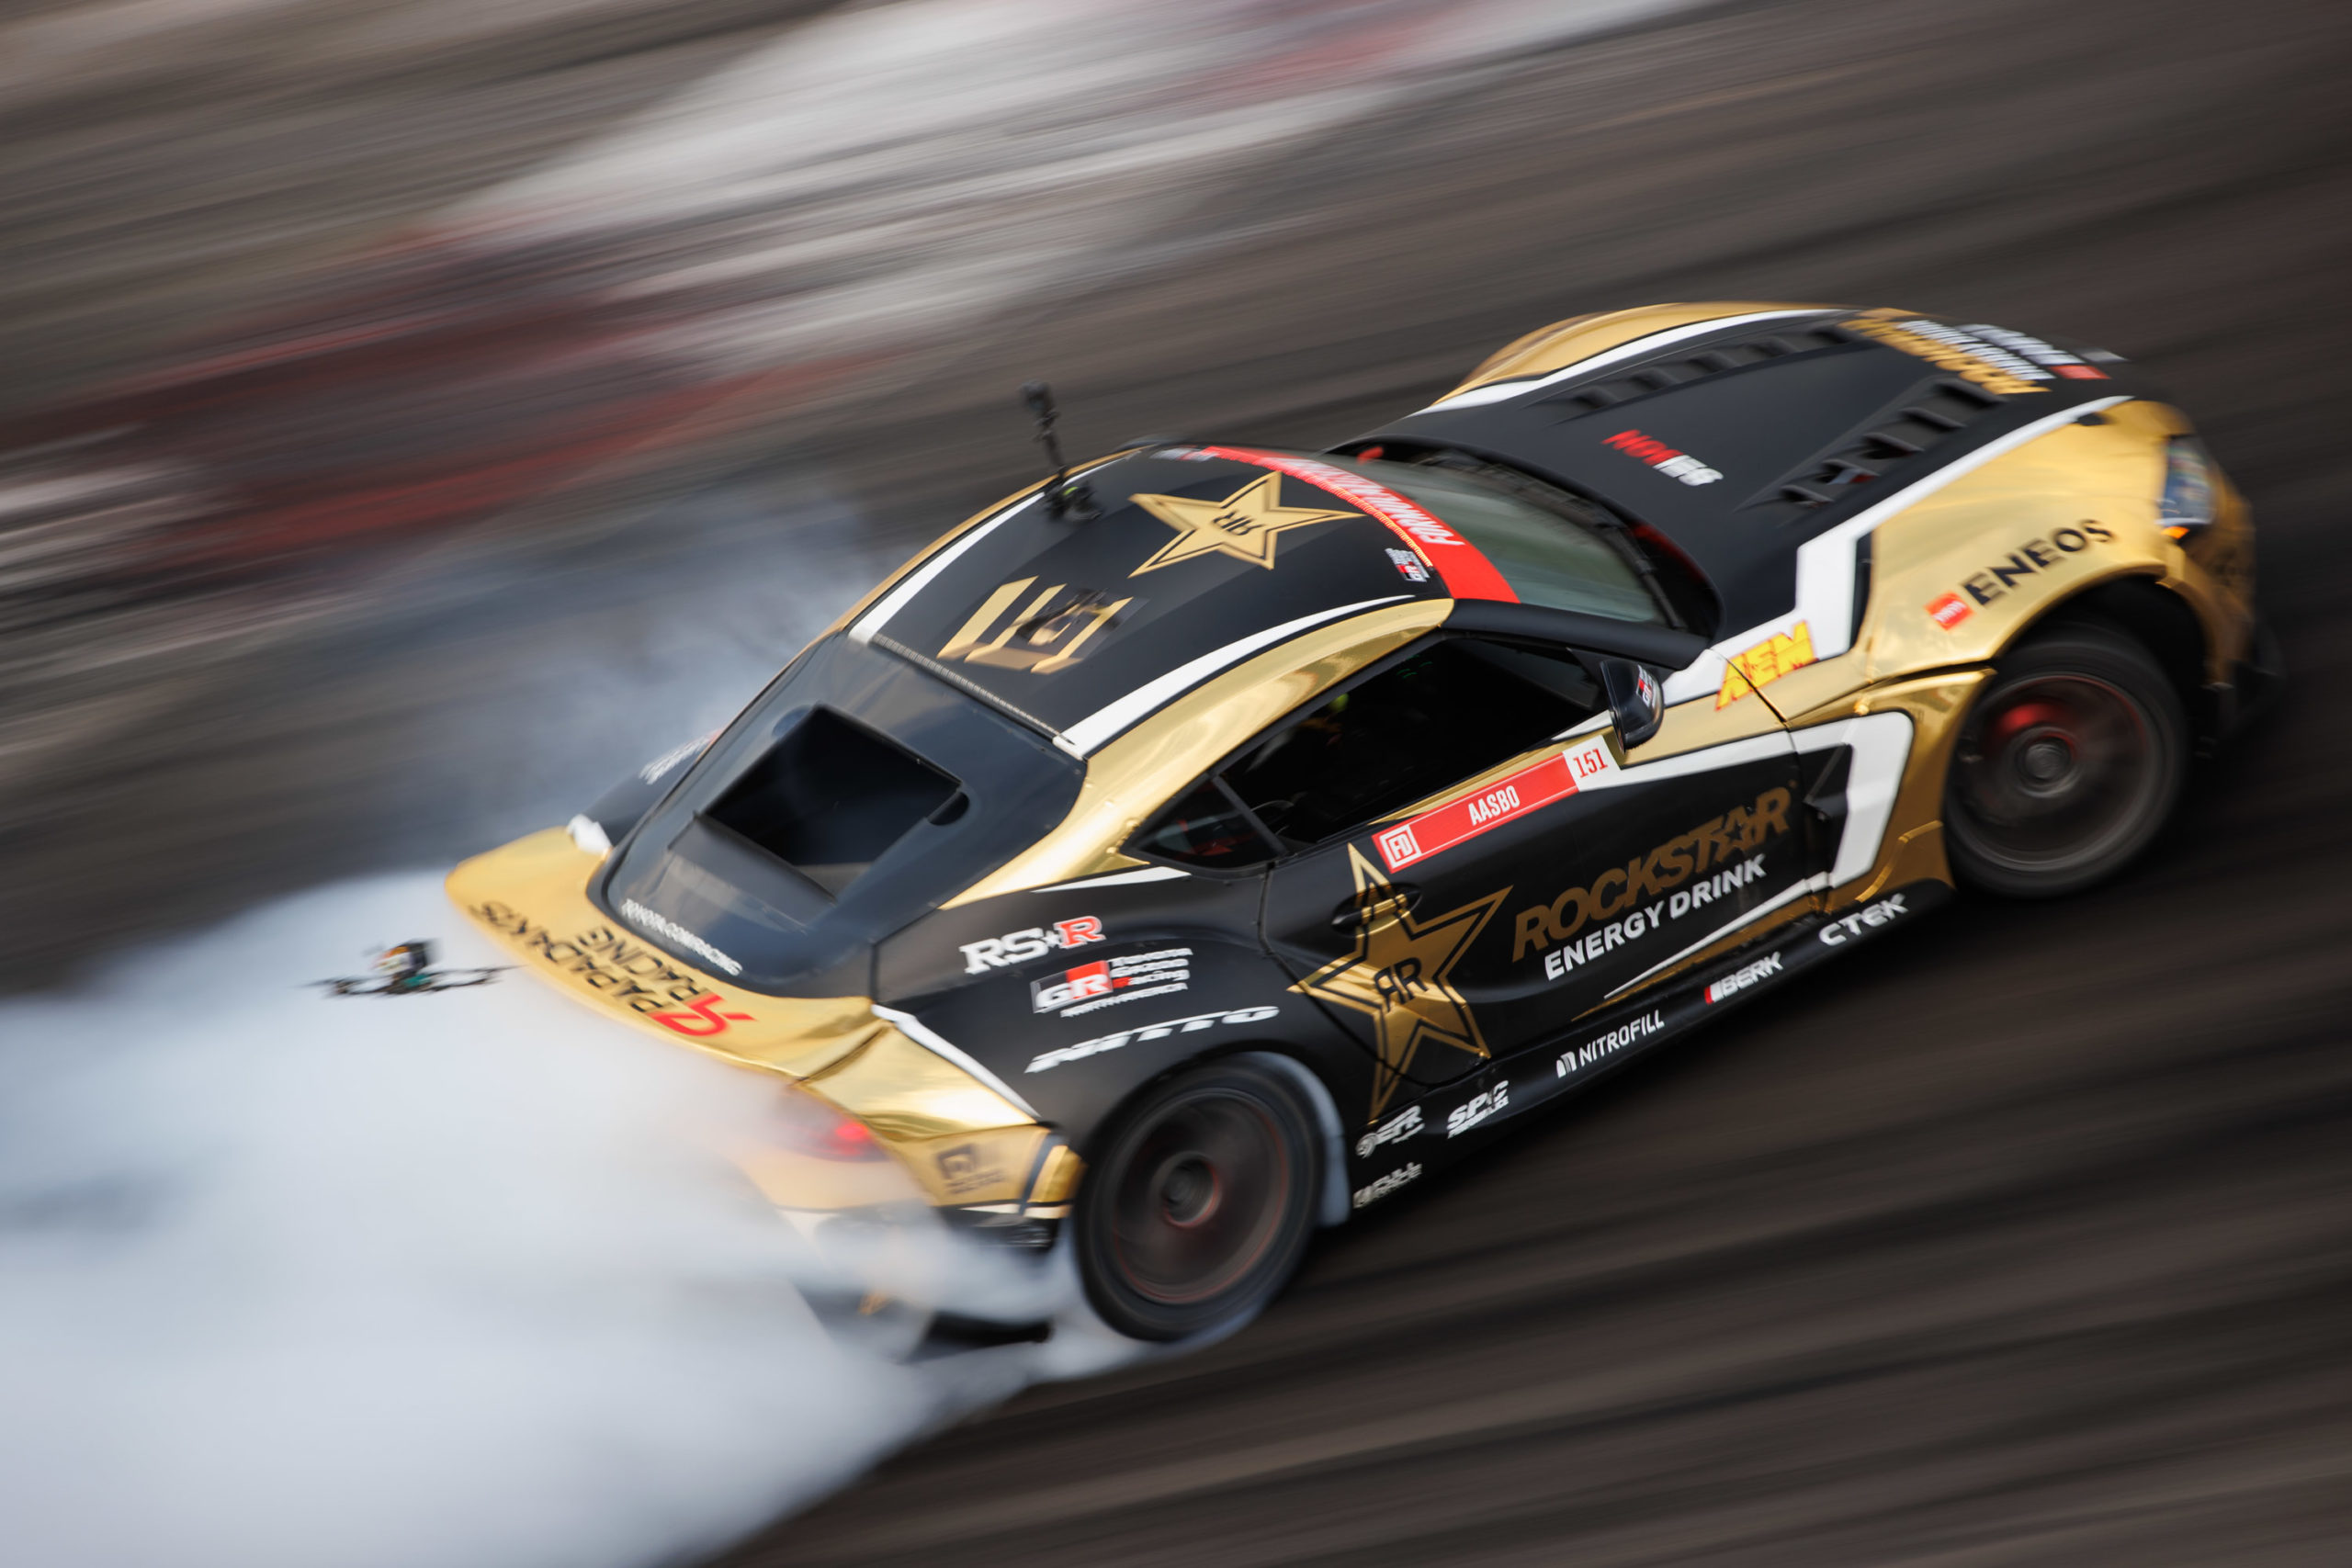 Gold ENEOS drag race car